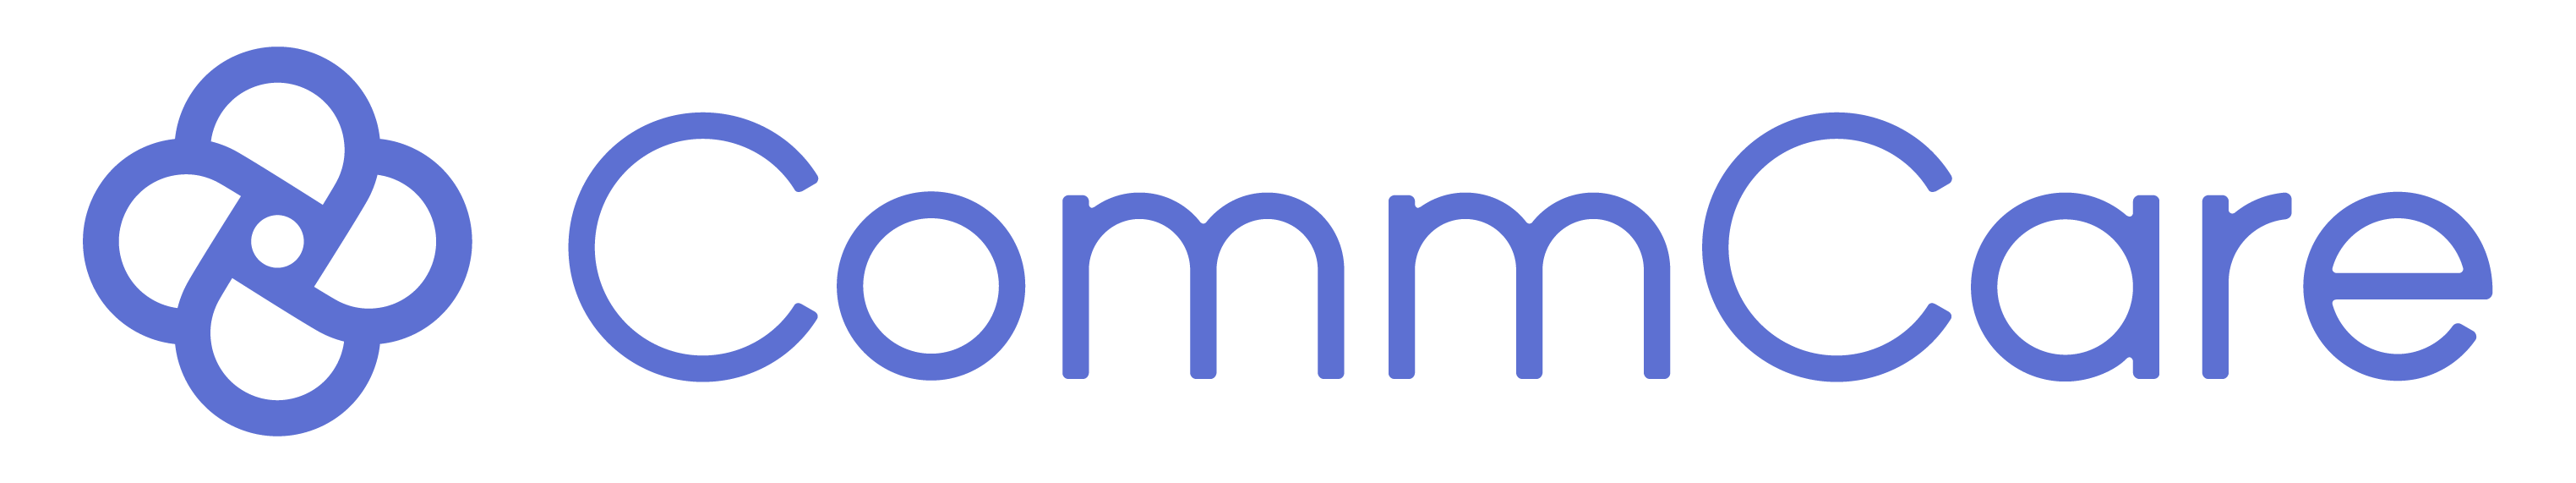 CommCare Logo